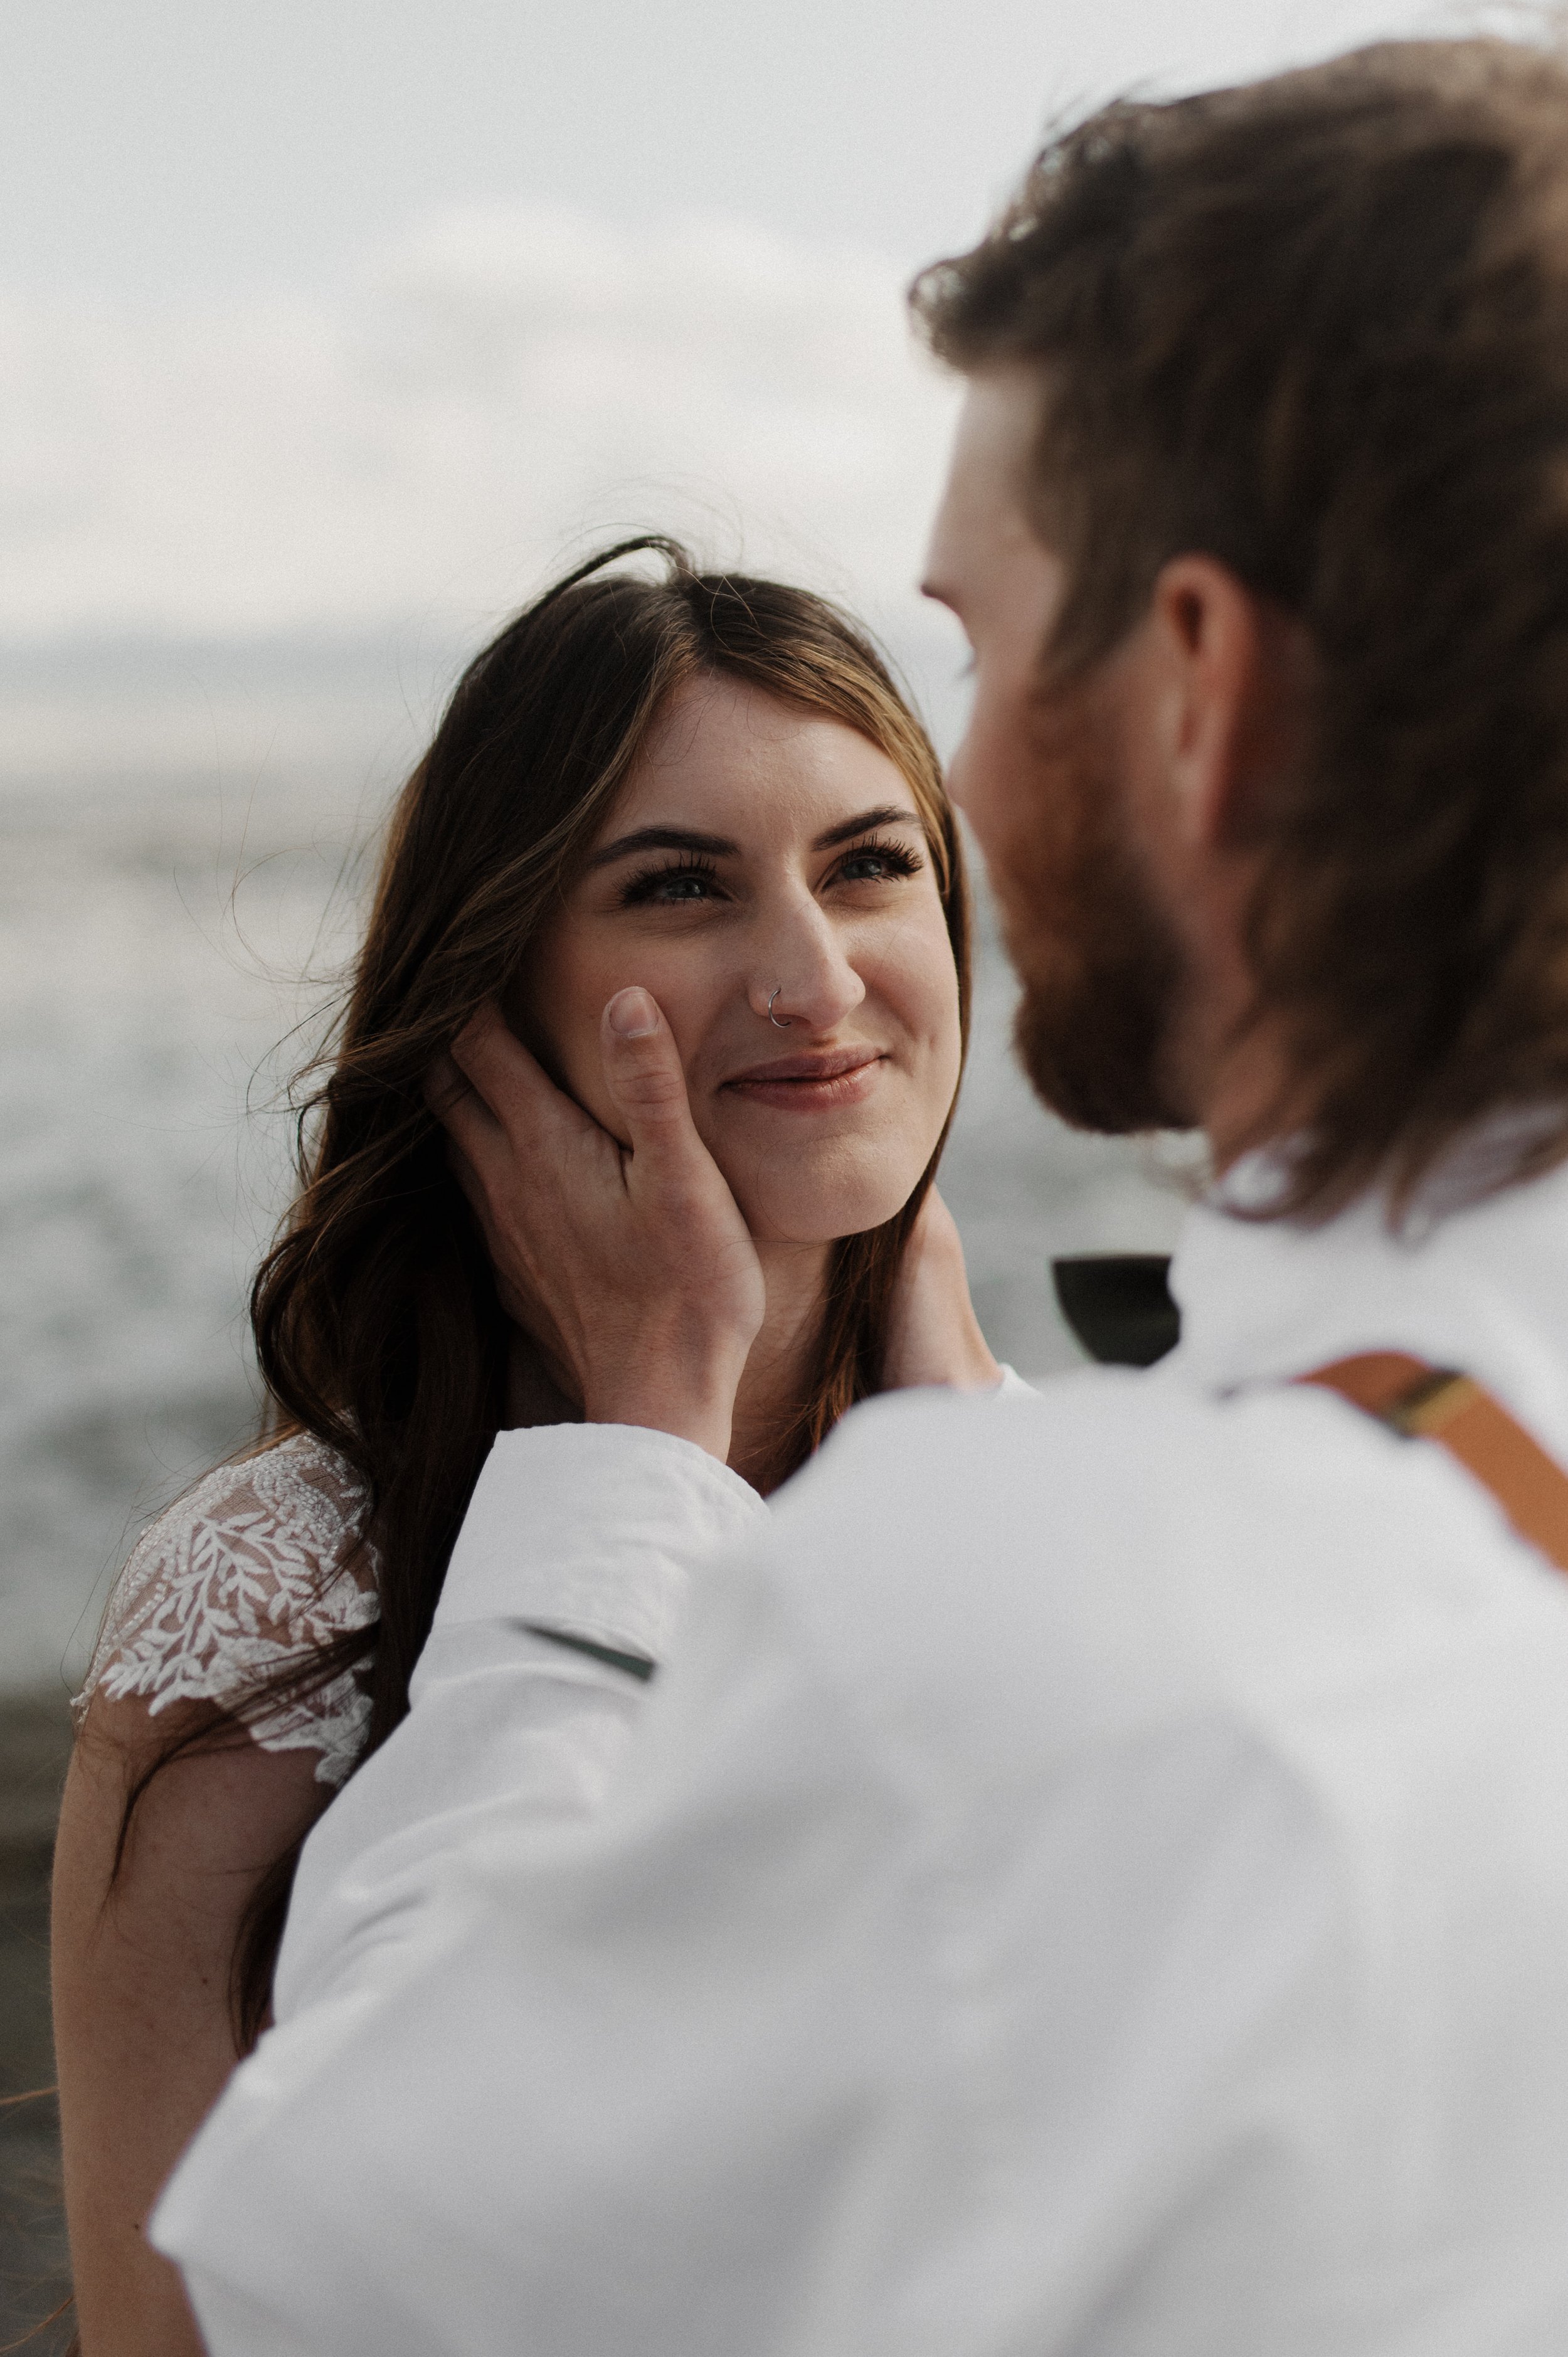 INTIMATE BEACH WEDDING | HOMER, ALASKA FILM PHOTOGRAPHER